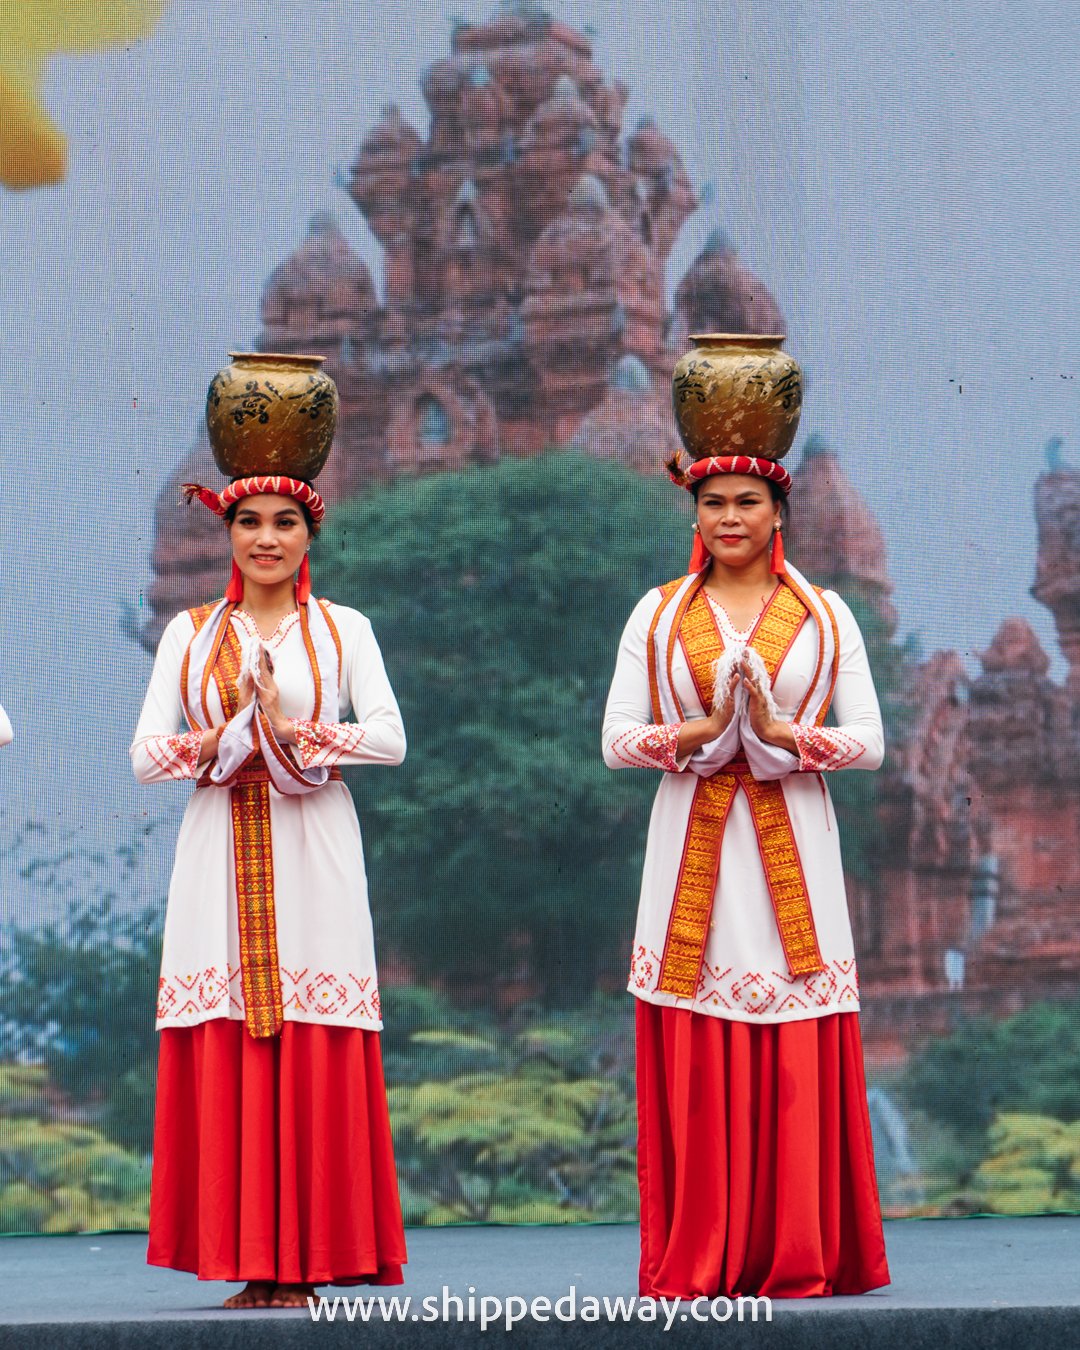 Ethnic ladies performing at Hoan Kiem Lake, Hanoi Old Quarter, Vietnam